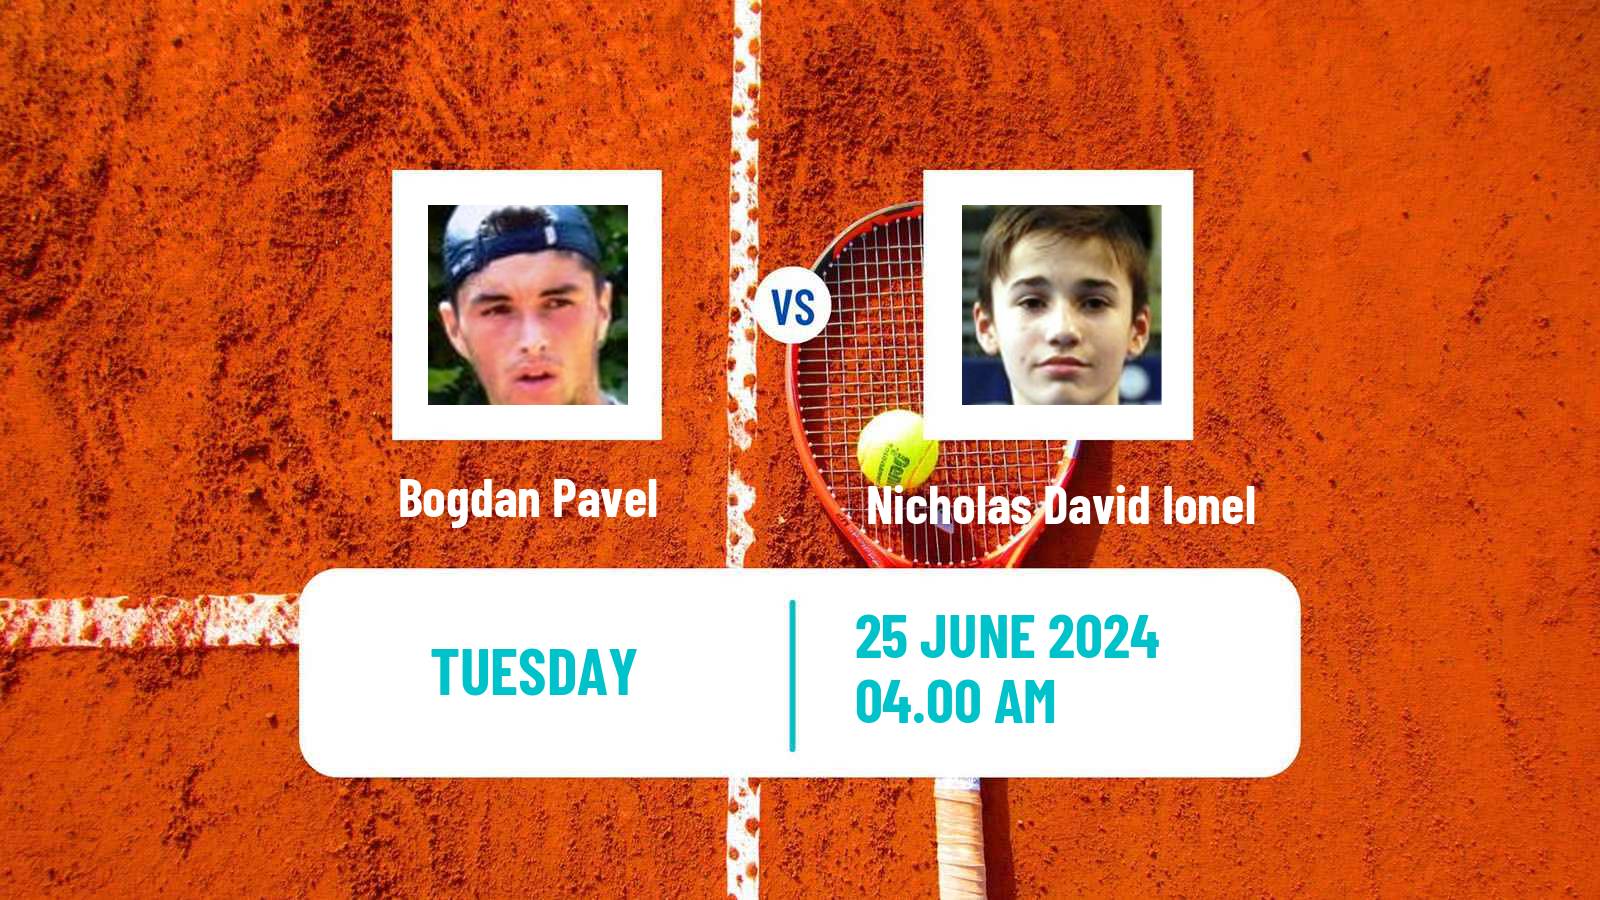 Tennis ITF M25 Satu Mare Men Bogdan Pavel - Nicholas David Ionel